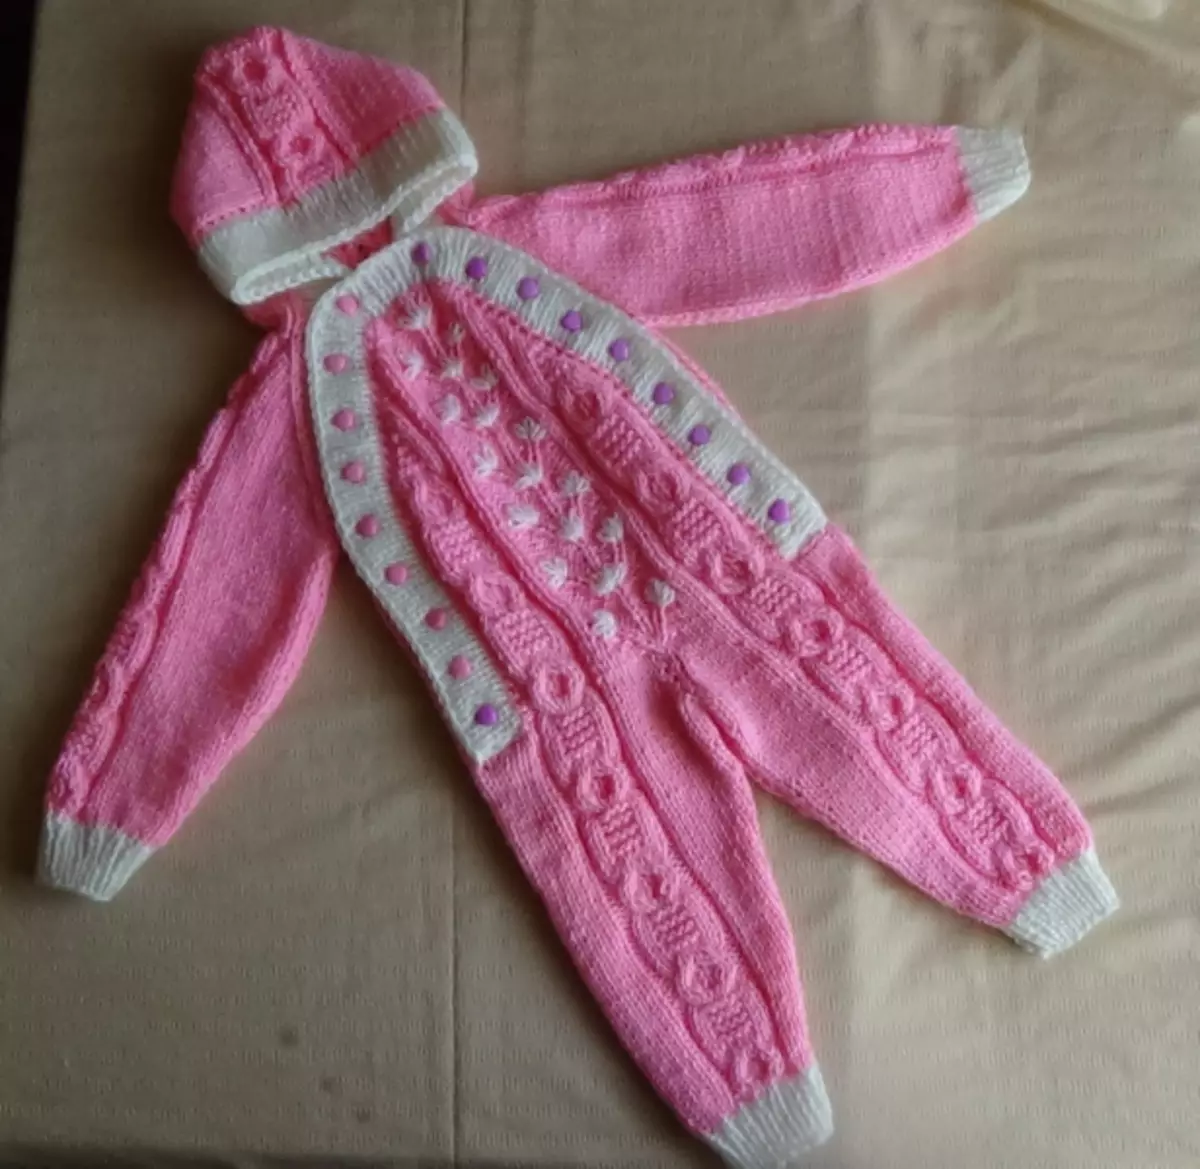 Jumpsuit Knitted สำหรับทารกแรกเกิด: บทเรียนโครเชต์วิดีโอ